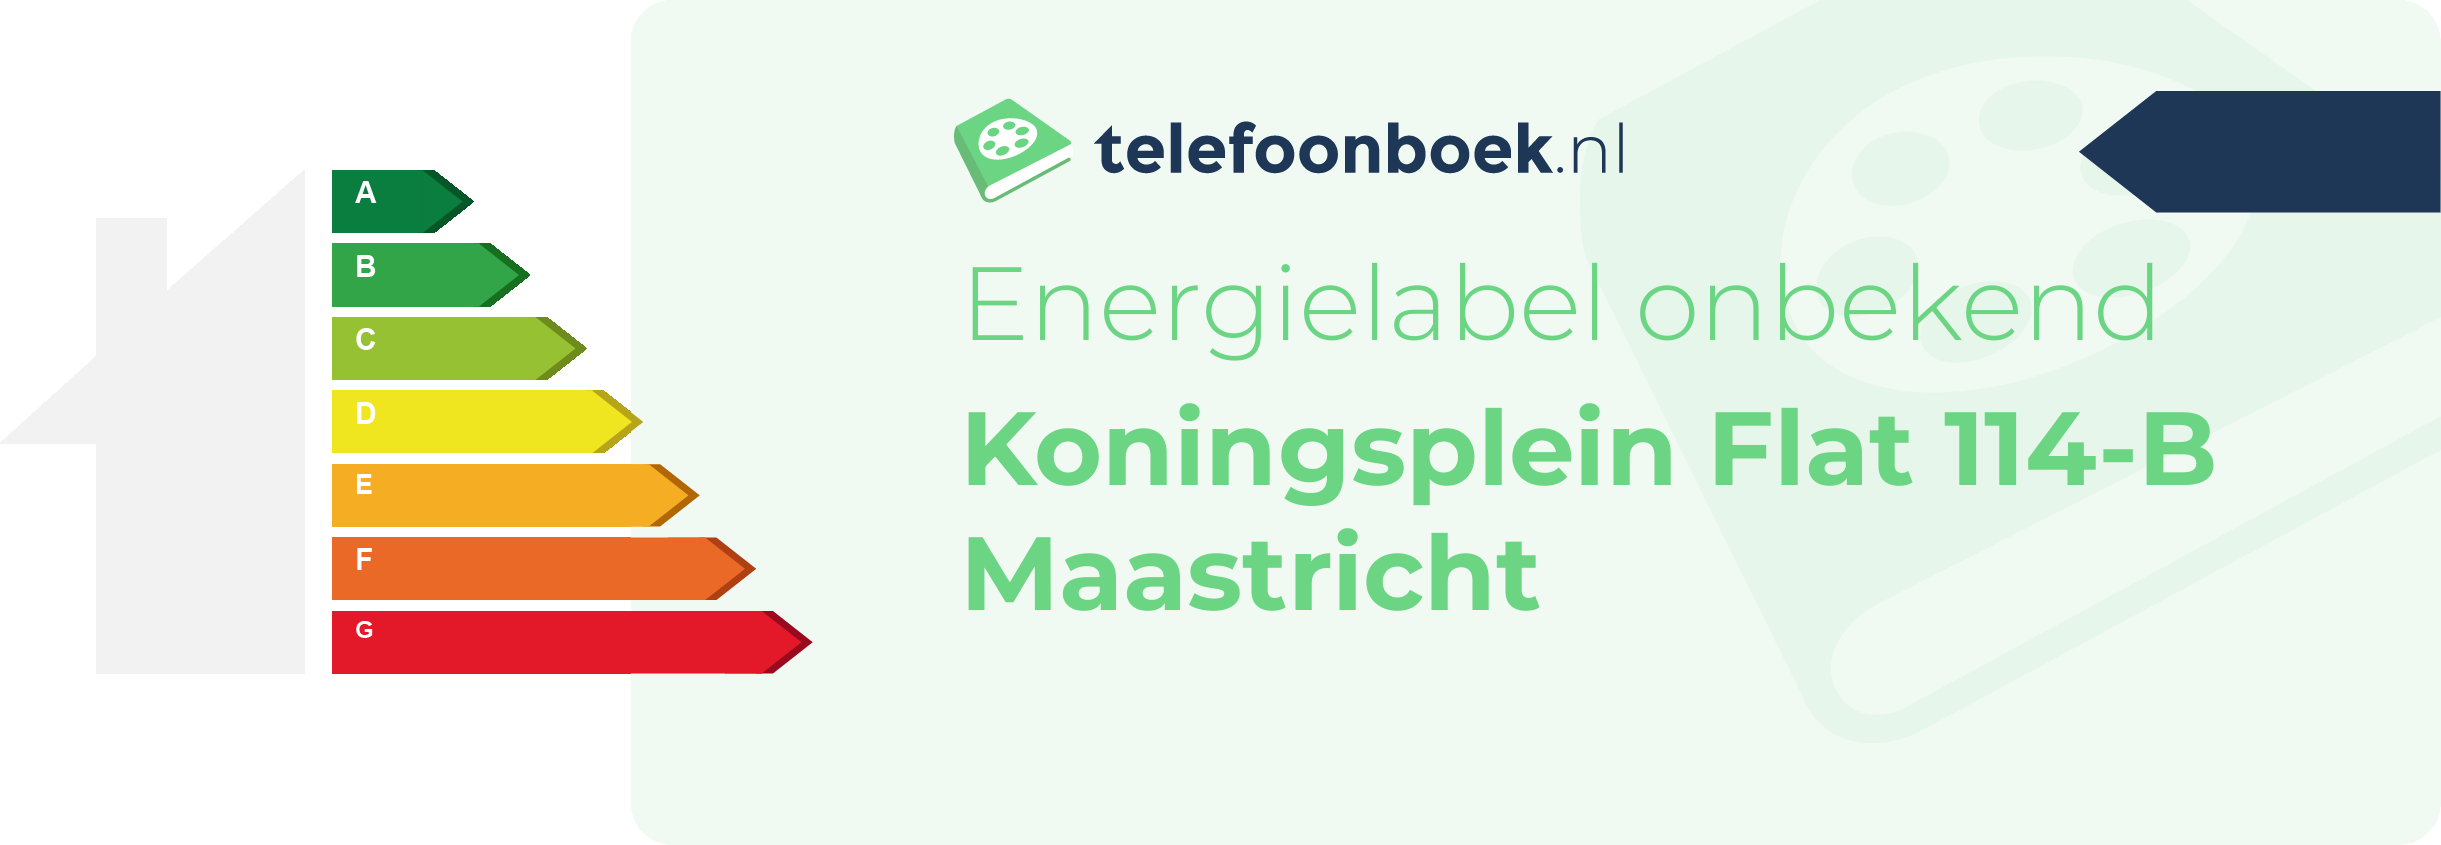 Energielabel Koningsplein Flat 114-B Maastricht